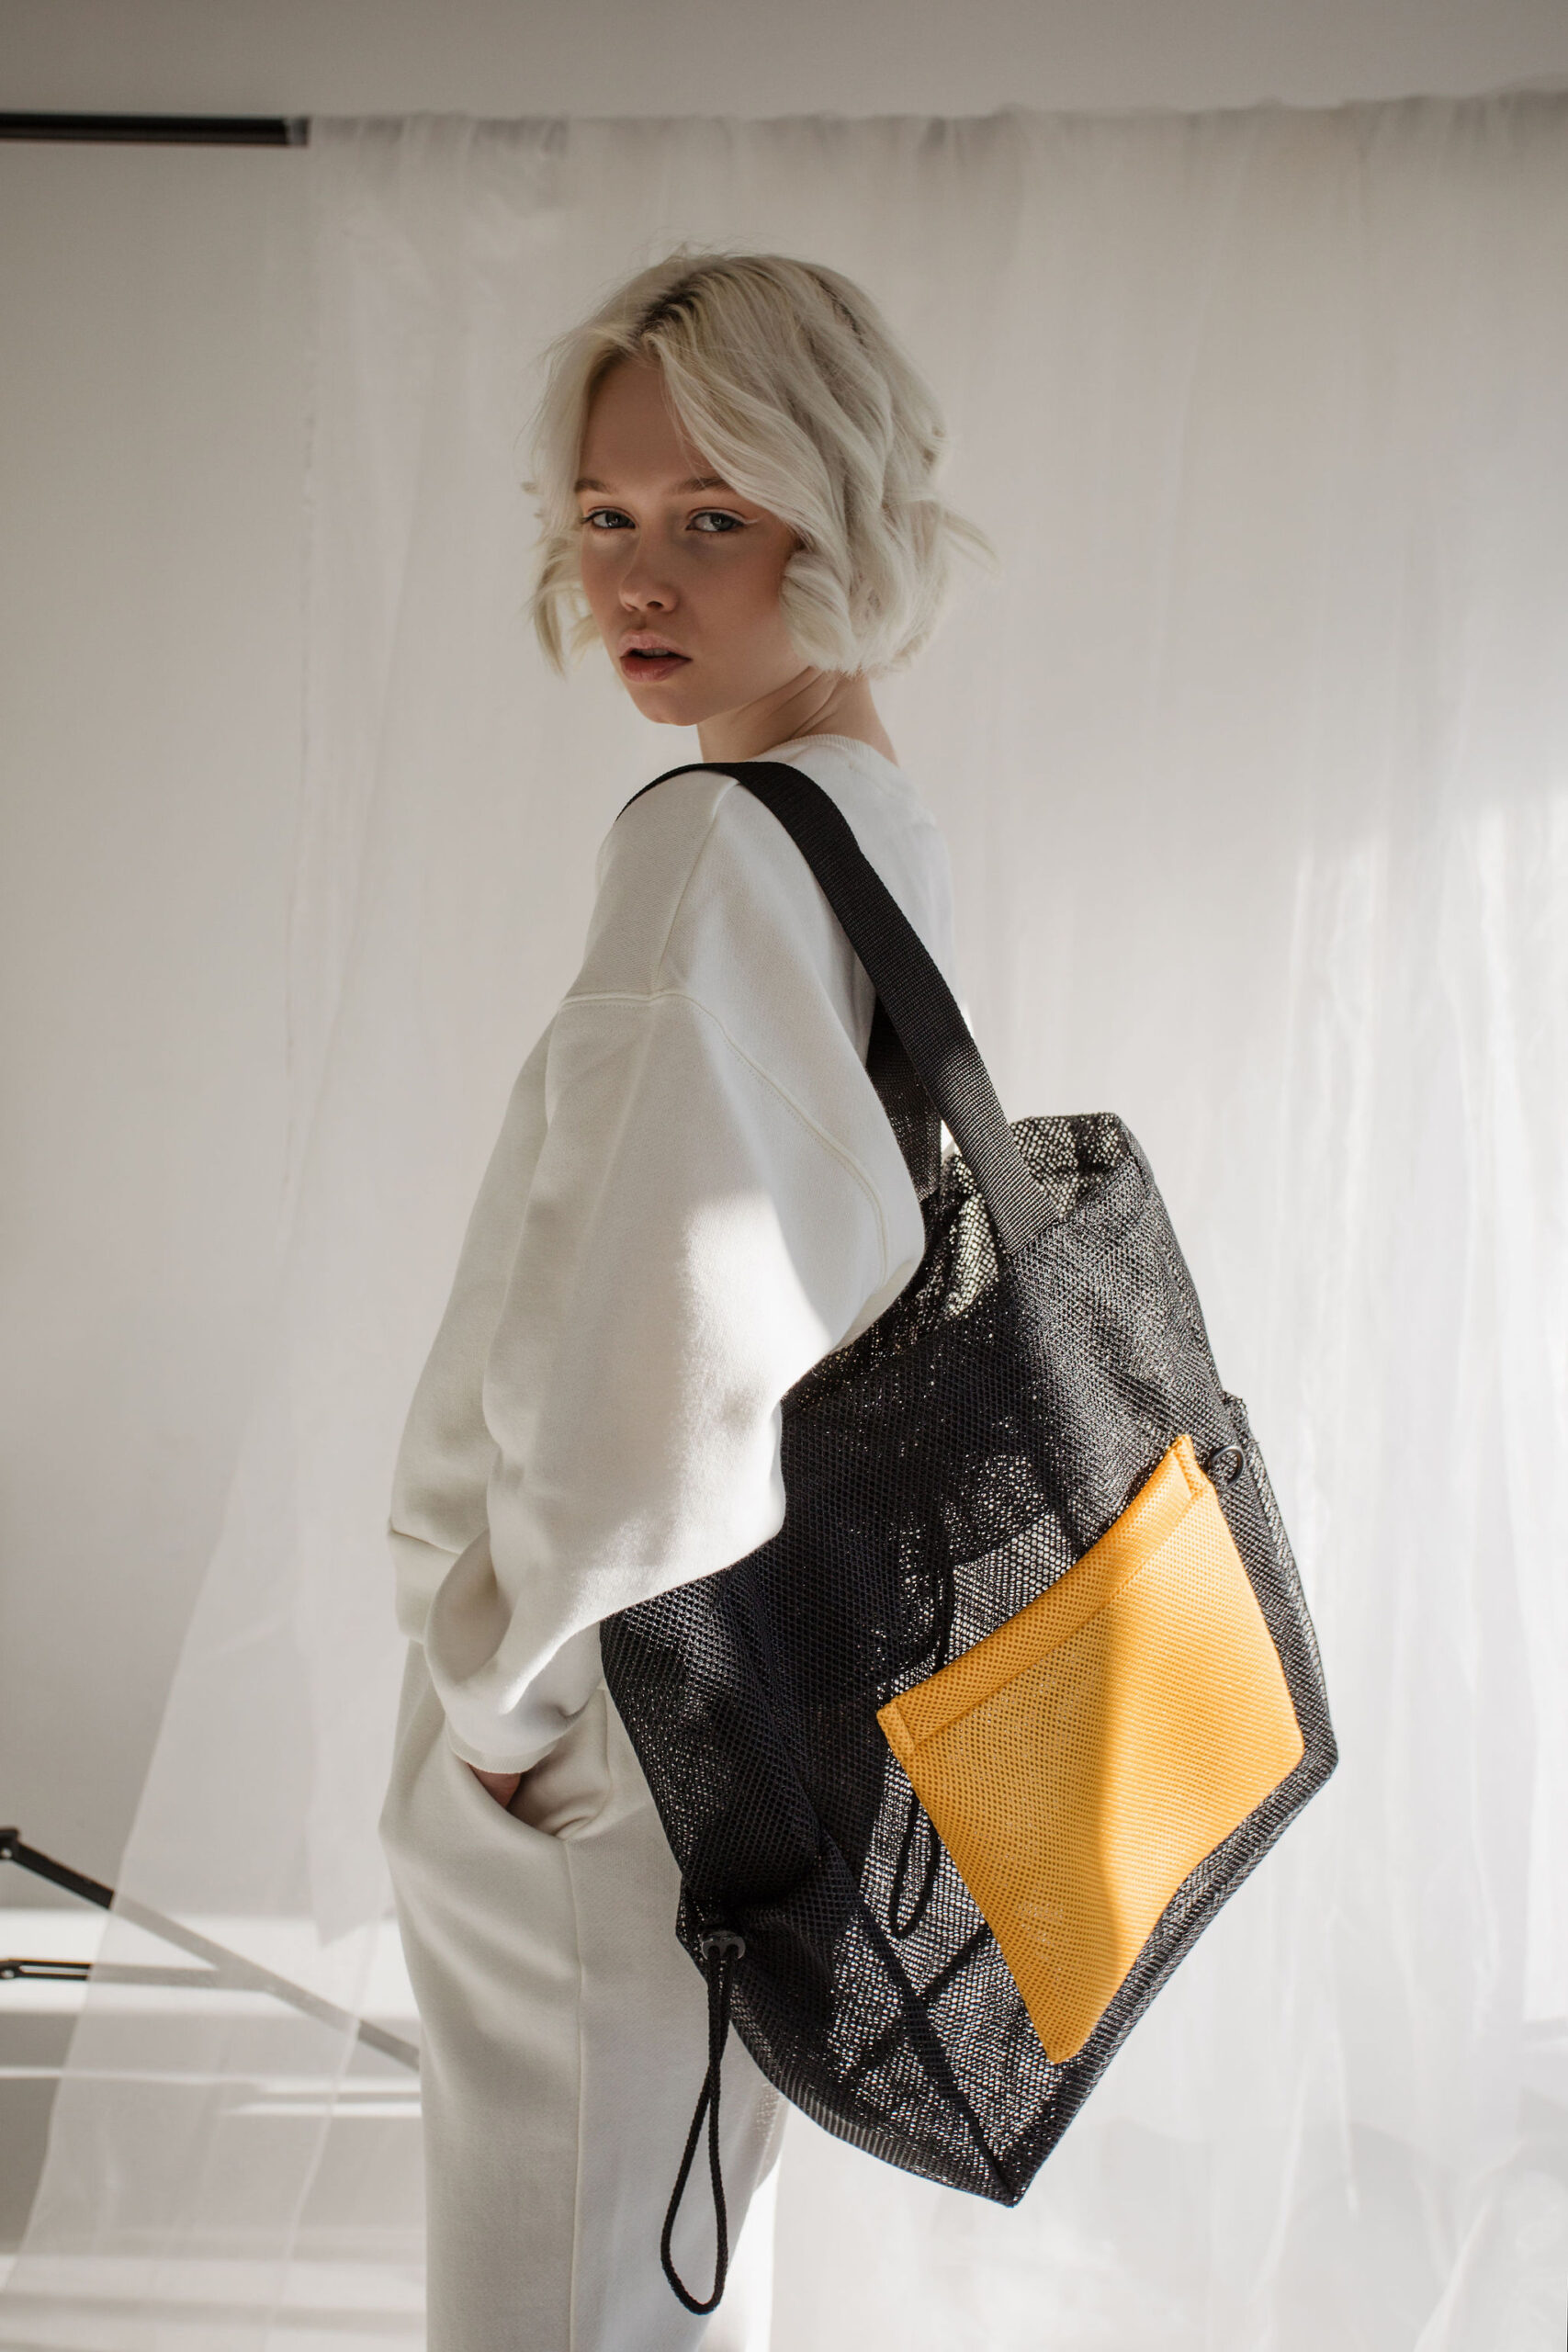 Kandekott “Carla” kollane tasku / Tote bag “Carla” yellow with black straps